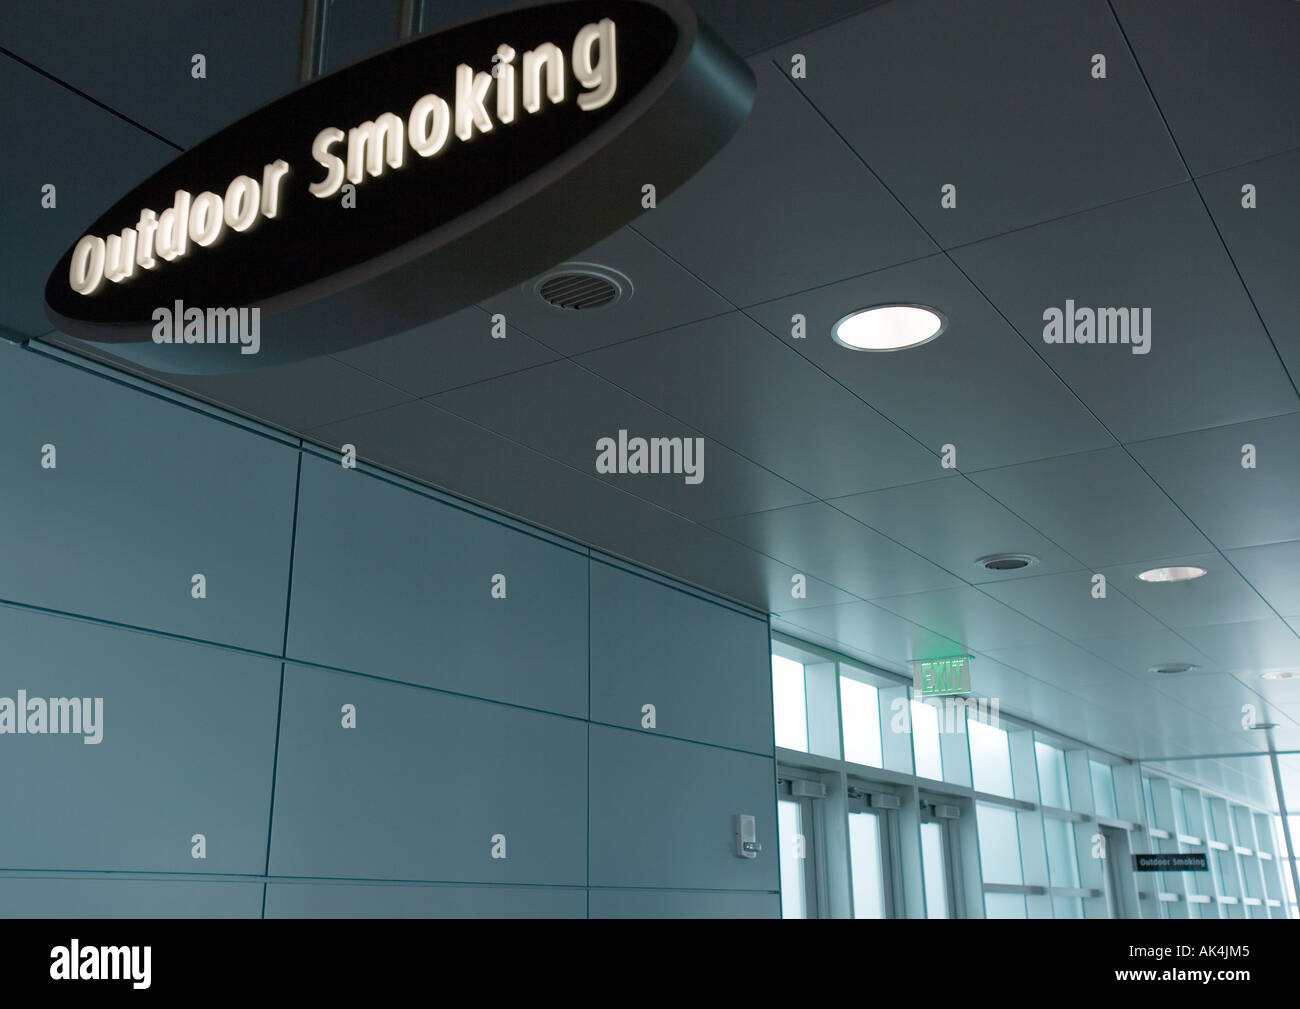 Outdoor smoking sign Stock Photo